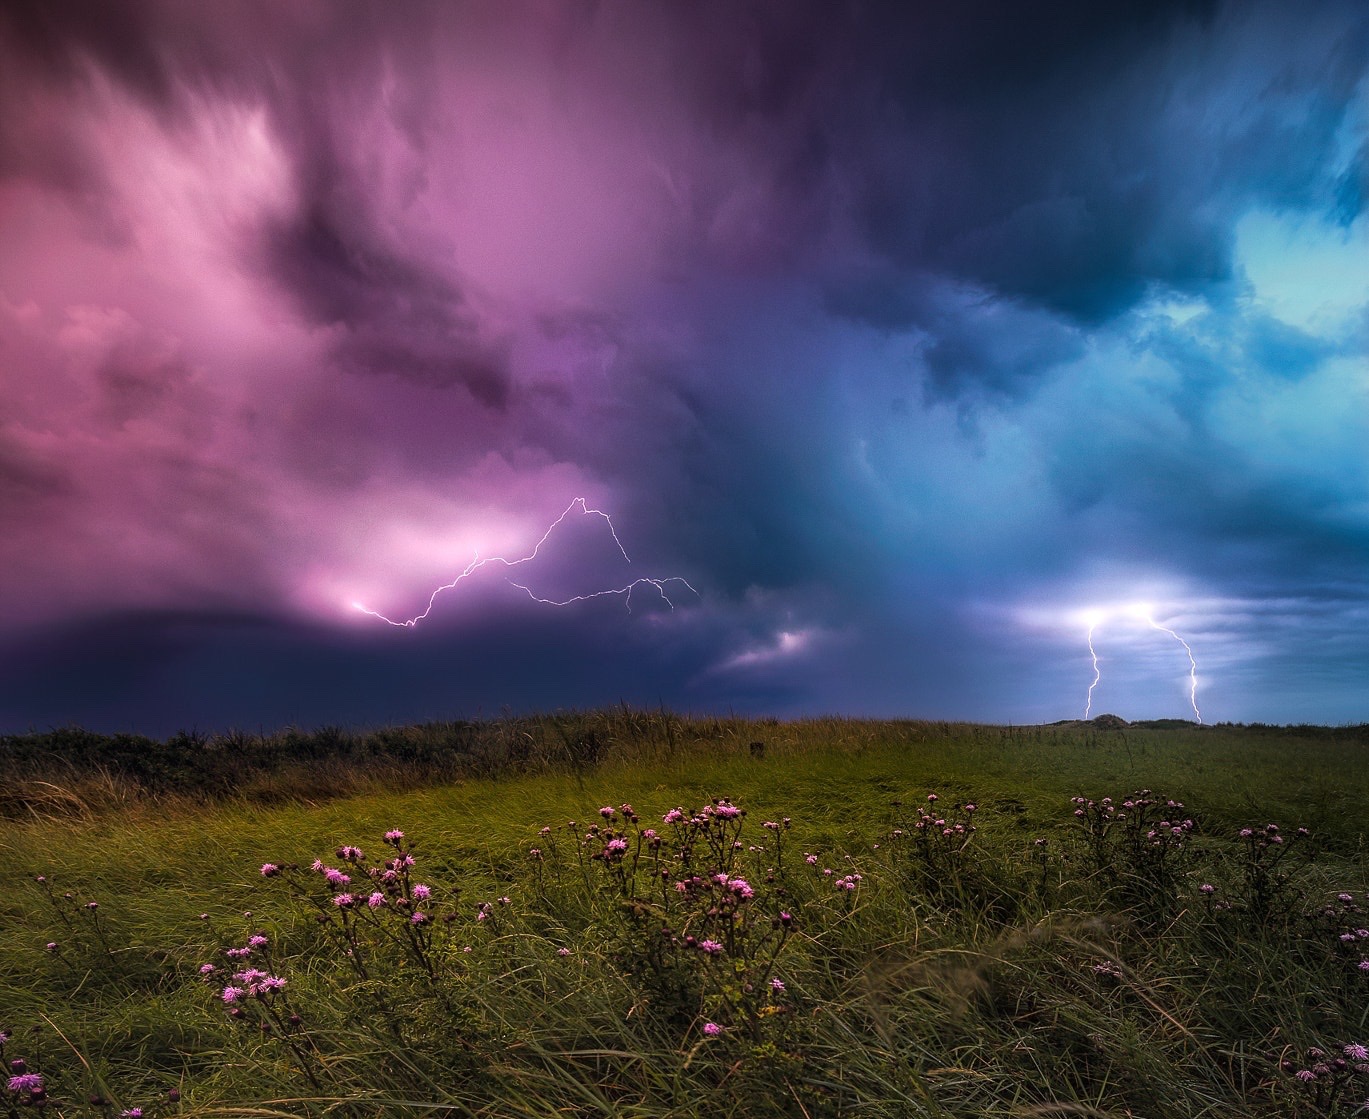  chasing lightning landscape photography tutorial 